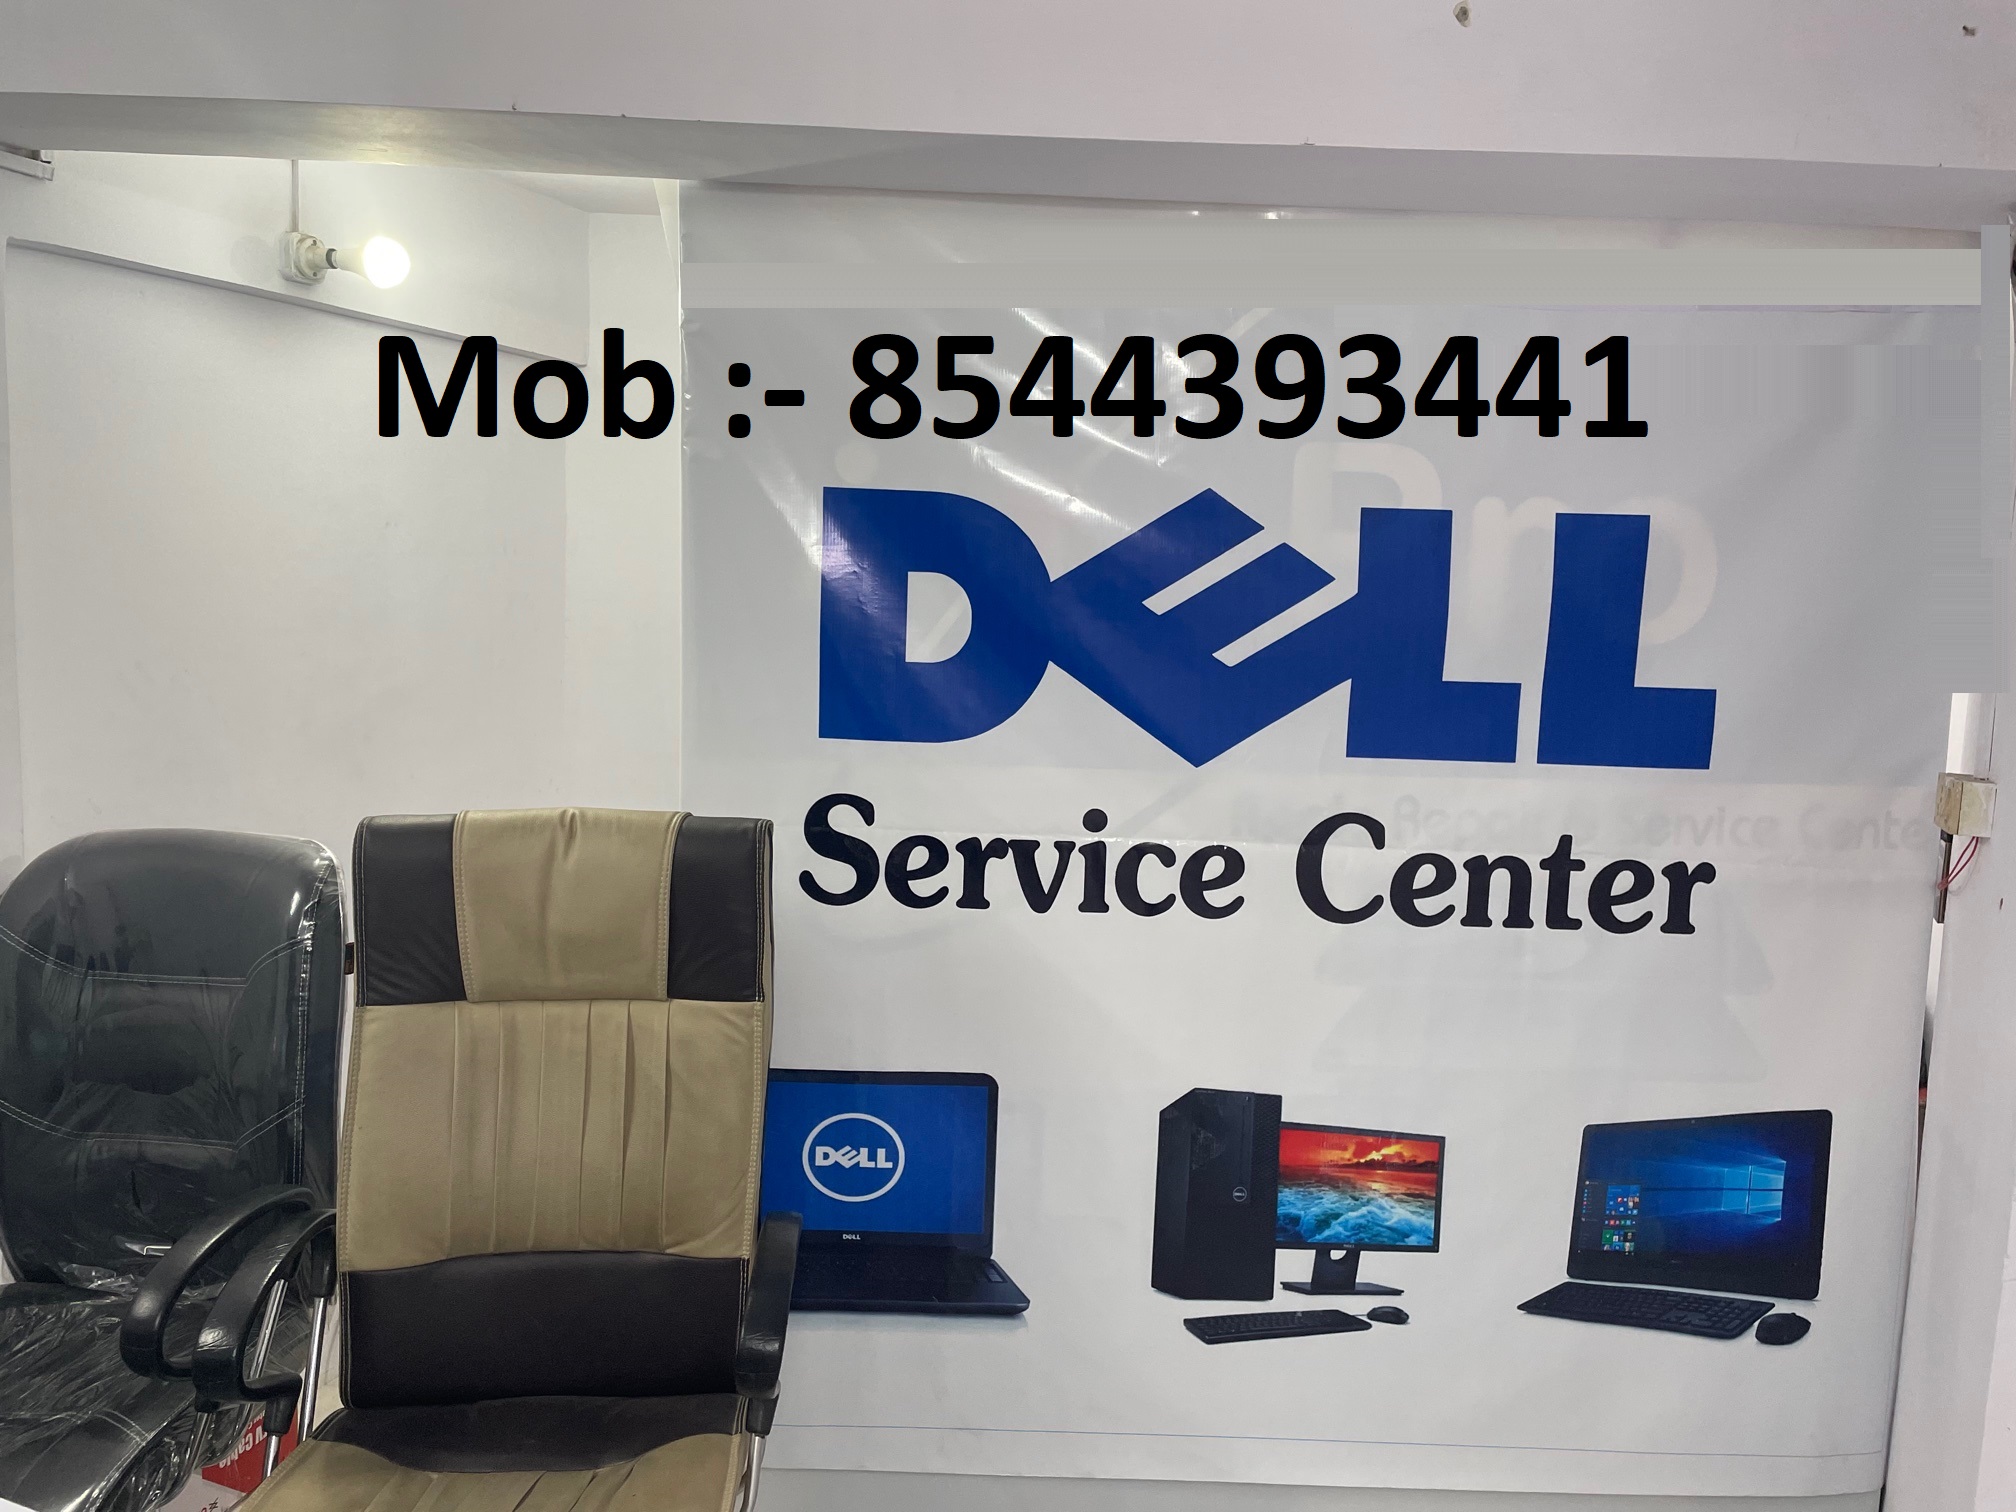 Dell Service Center In Patna